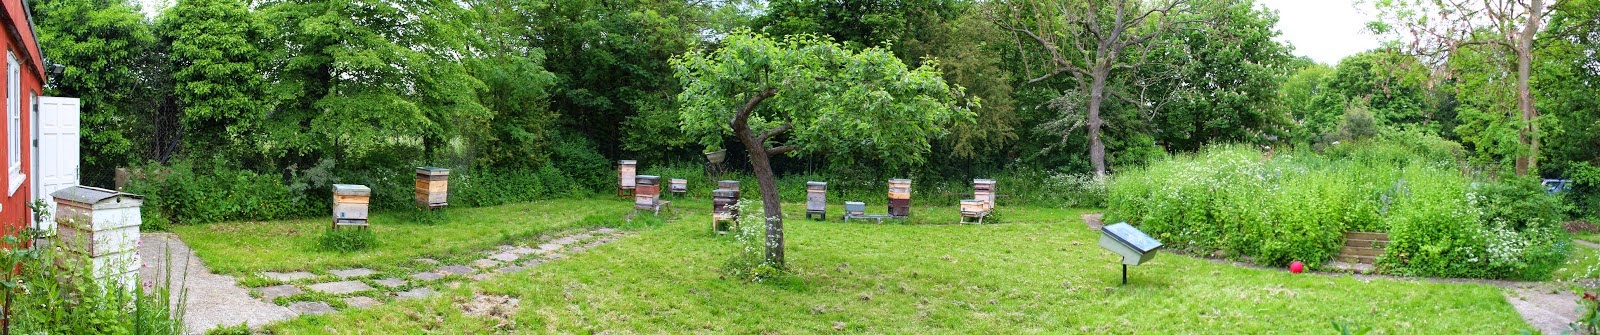 Epsom apiary